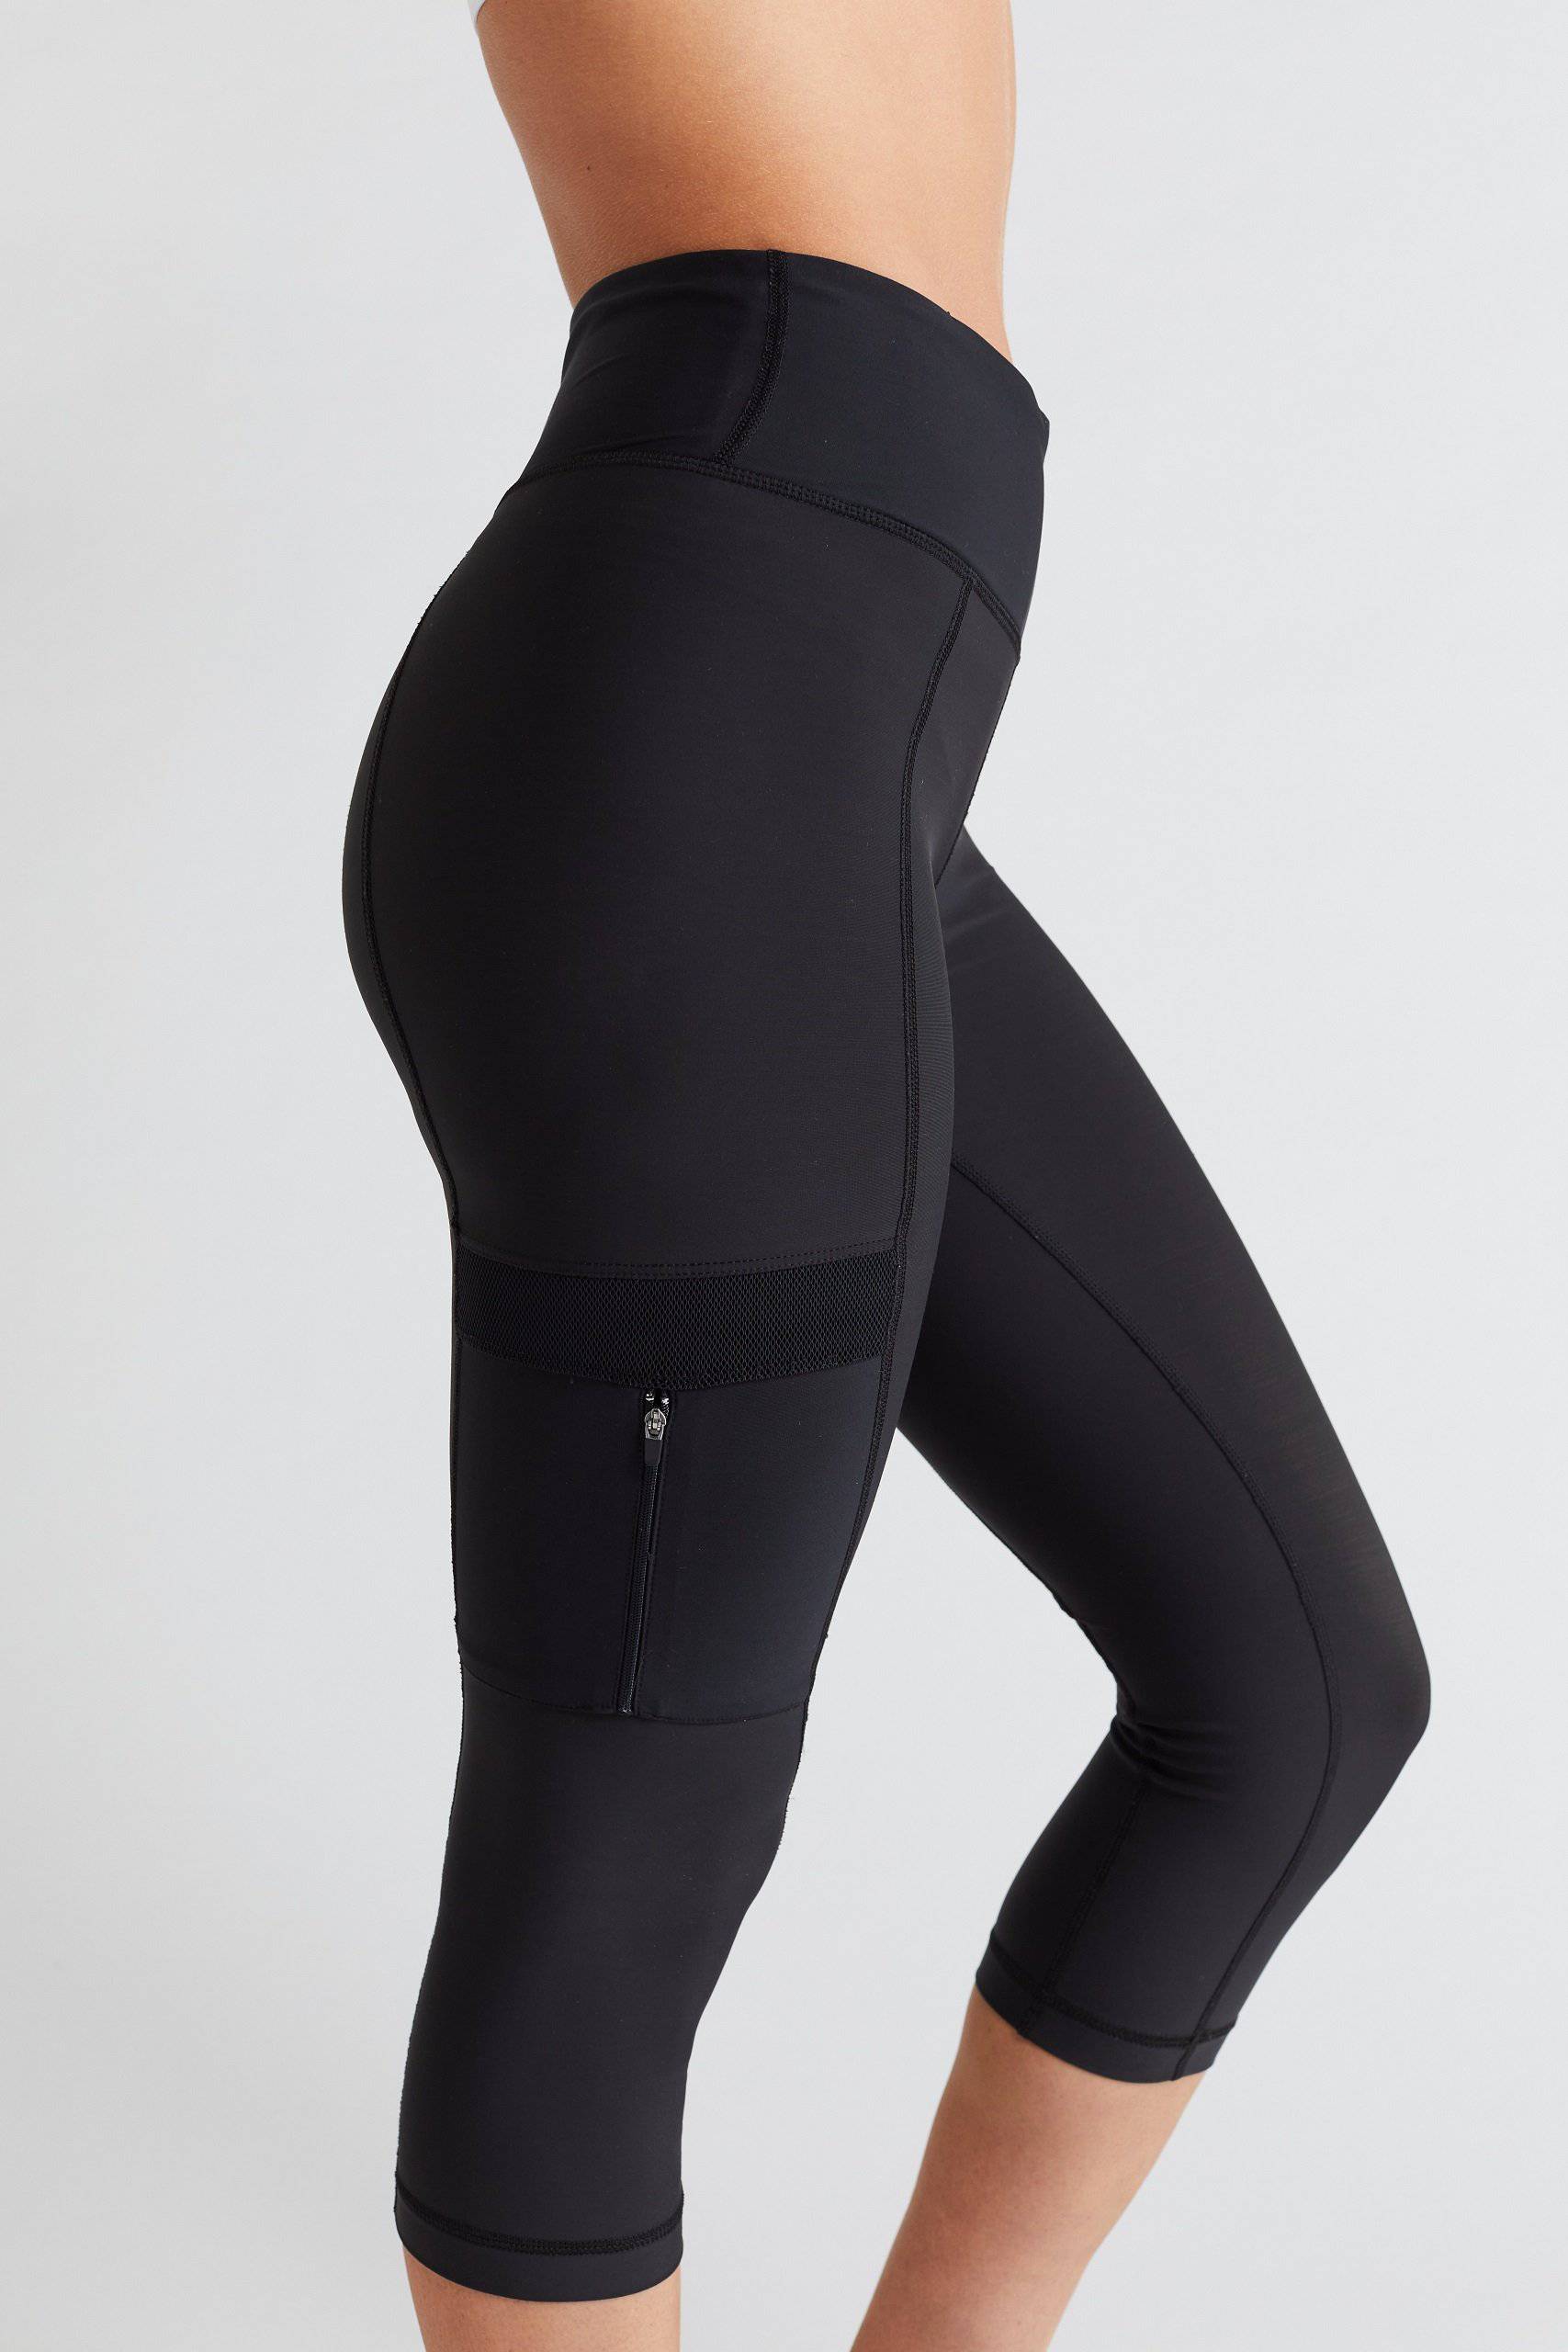 Buy a Reebok Womens Focus Capri Compression Athletic Pants | Tagsweekly